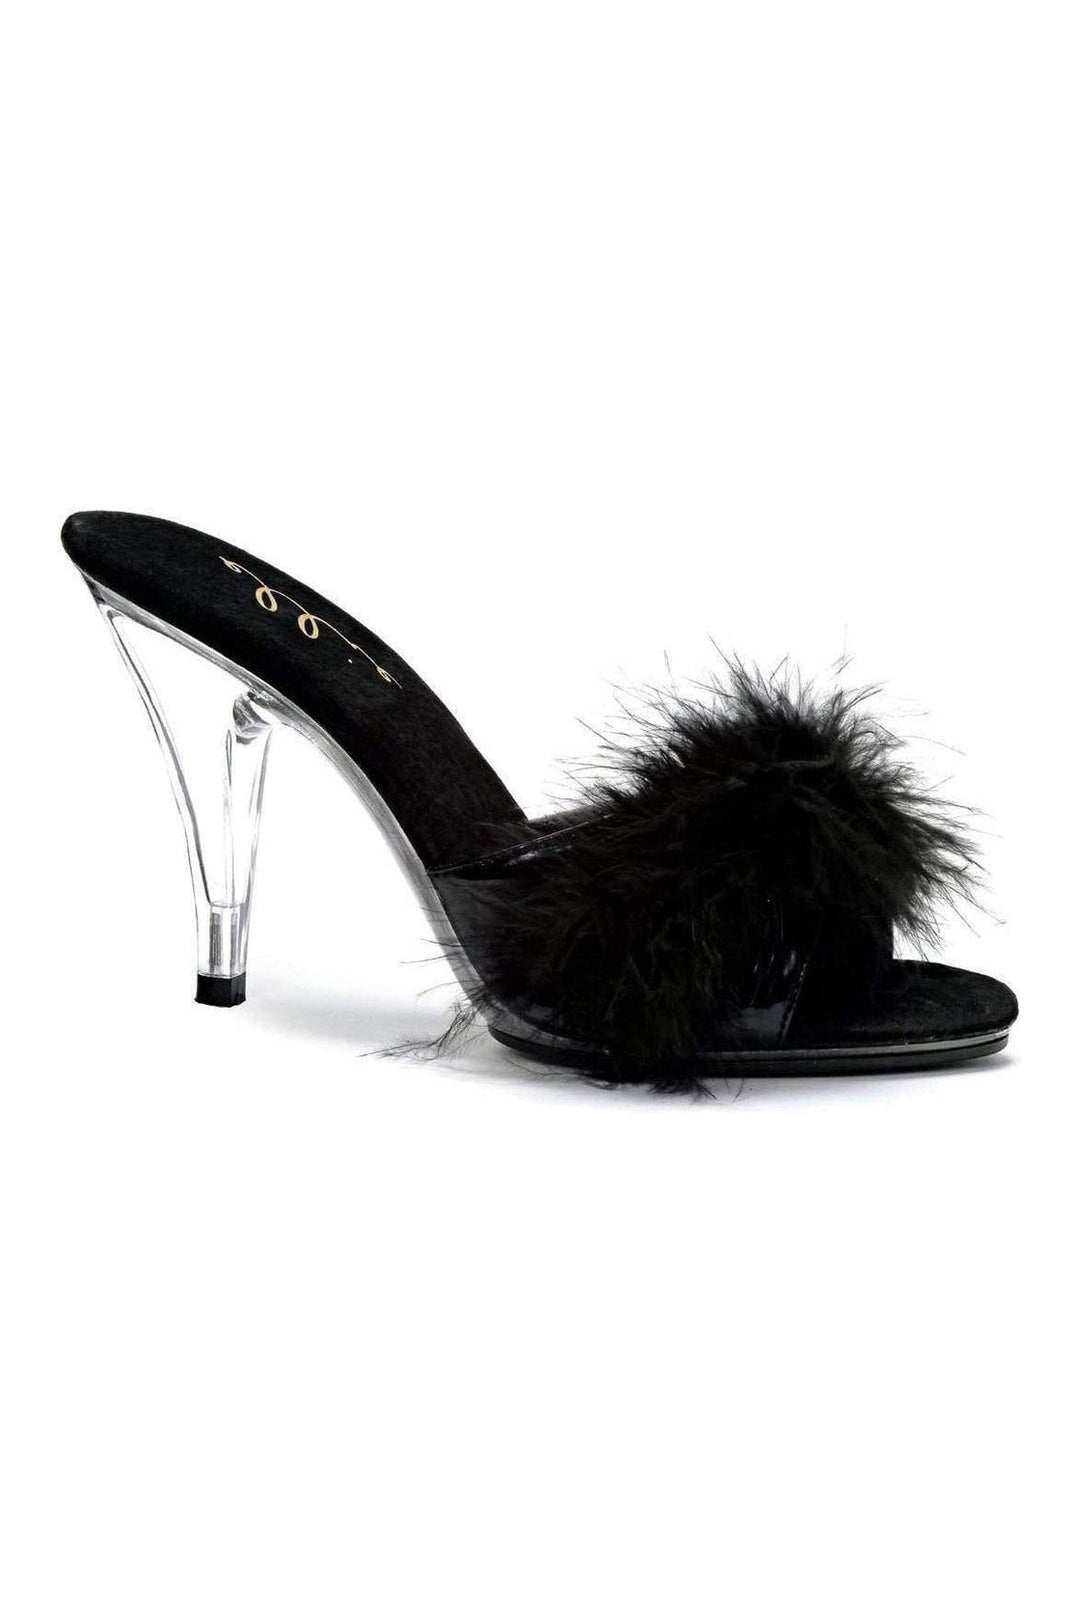 405-SASHA Marabou | Black Patent-Ellie Shoes-Black-Marabous-SEXYSHOES.COM